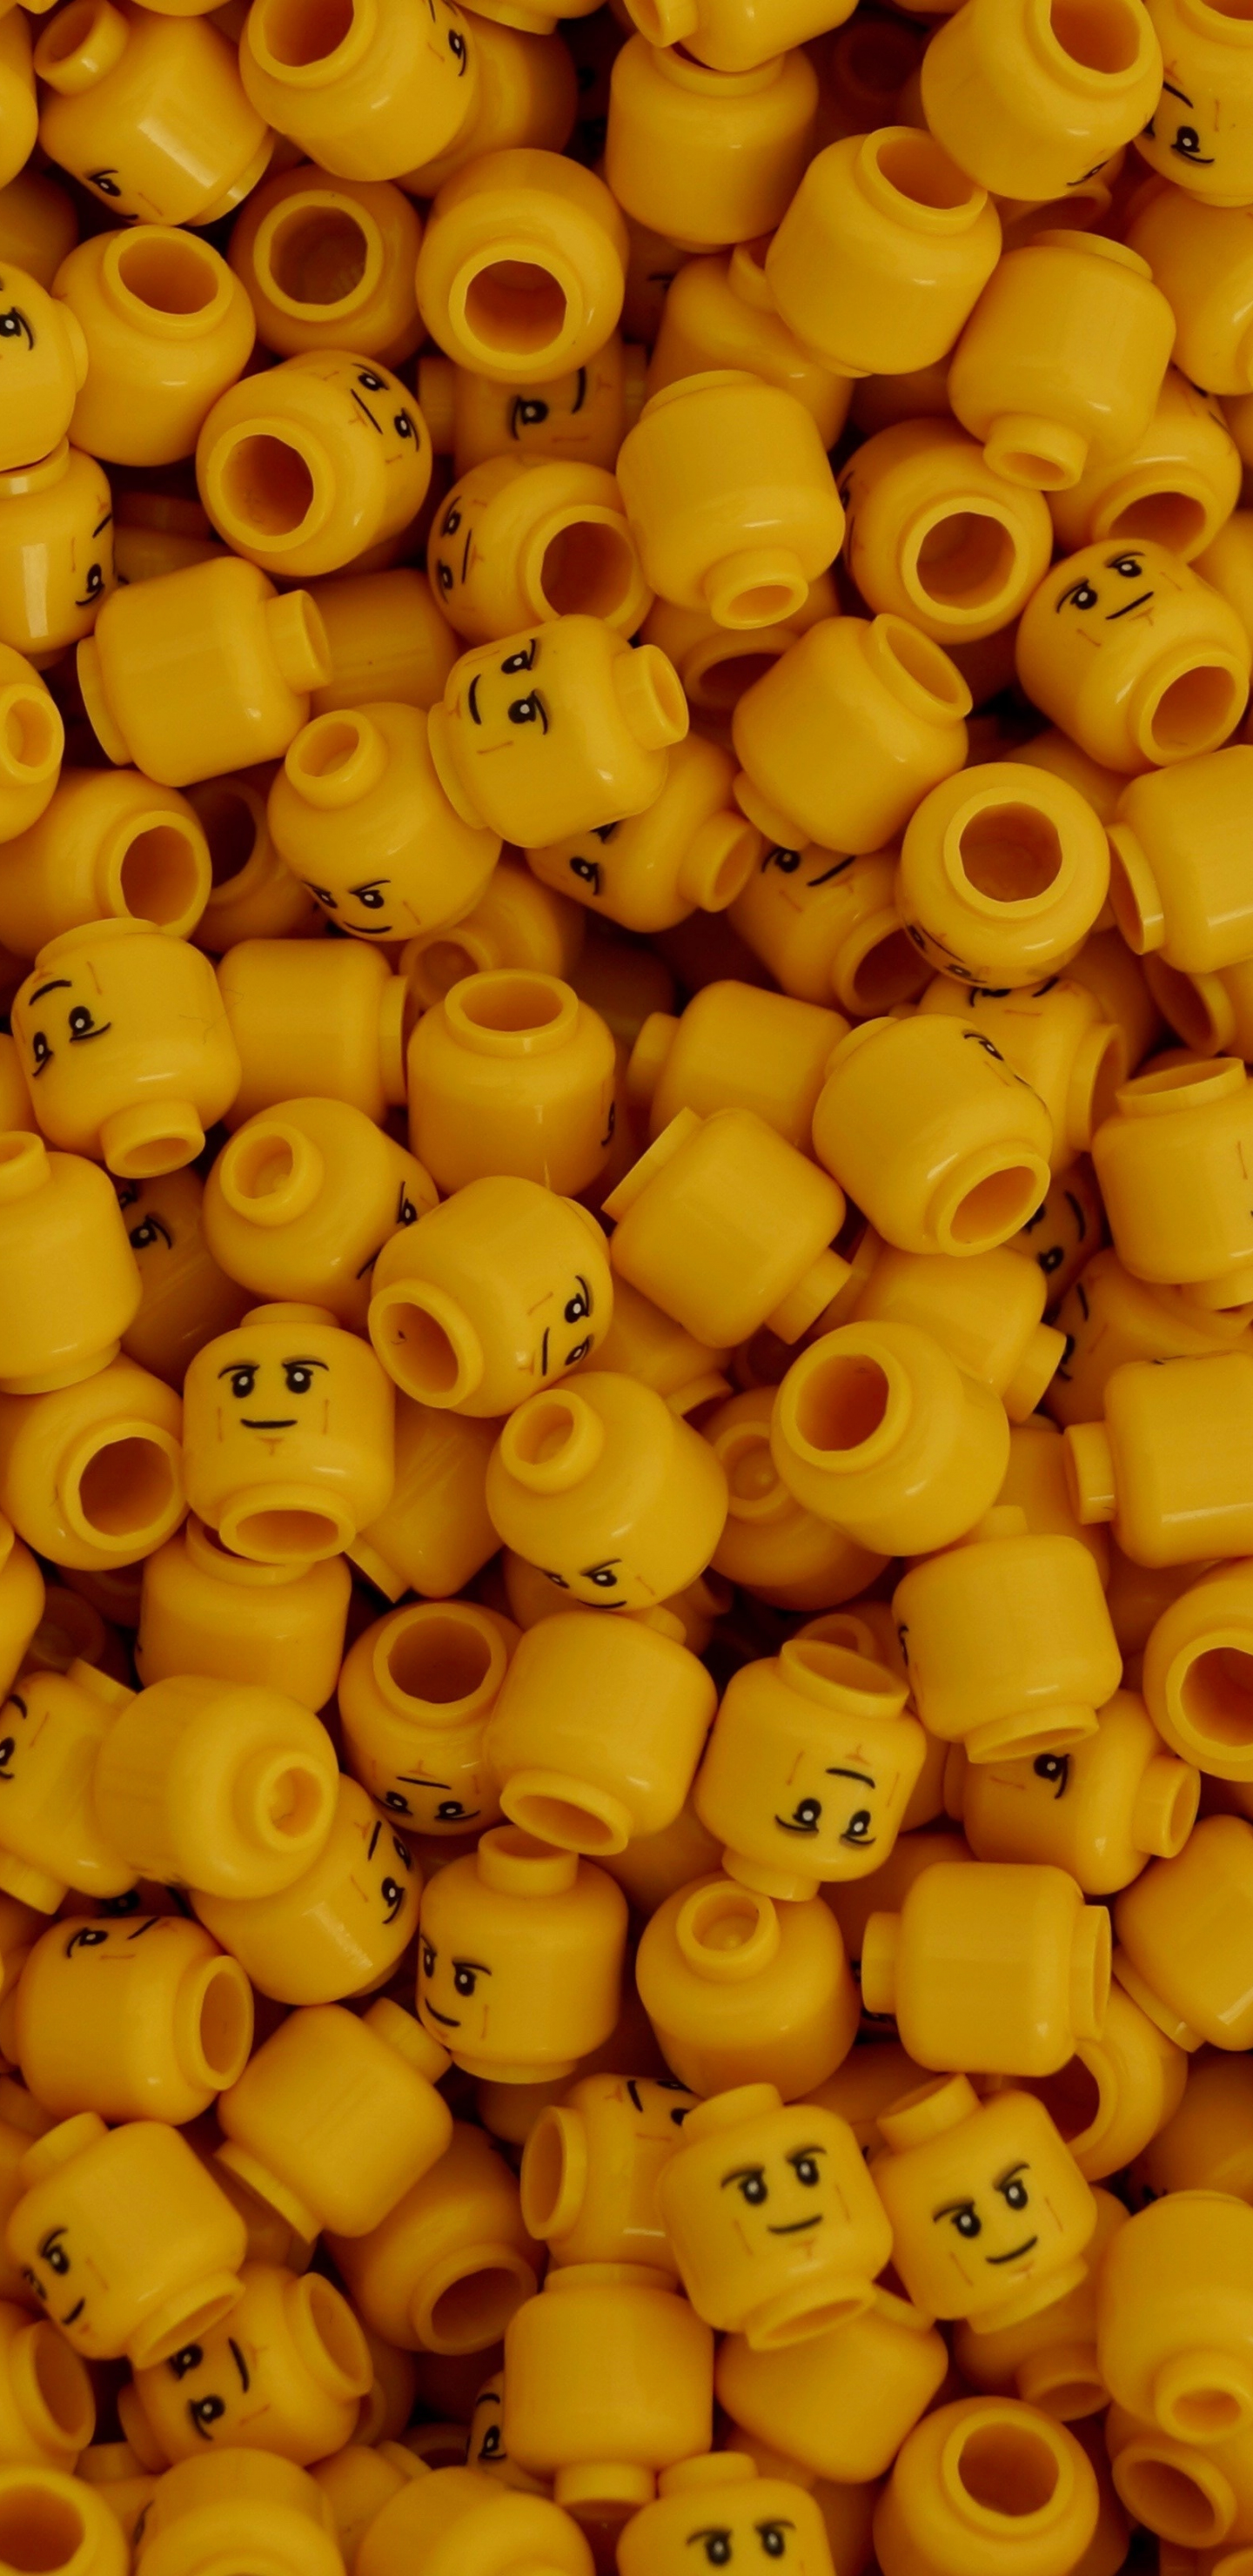 Yellow, Lego, toy, 1440x2960 wallpaper